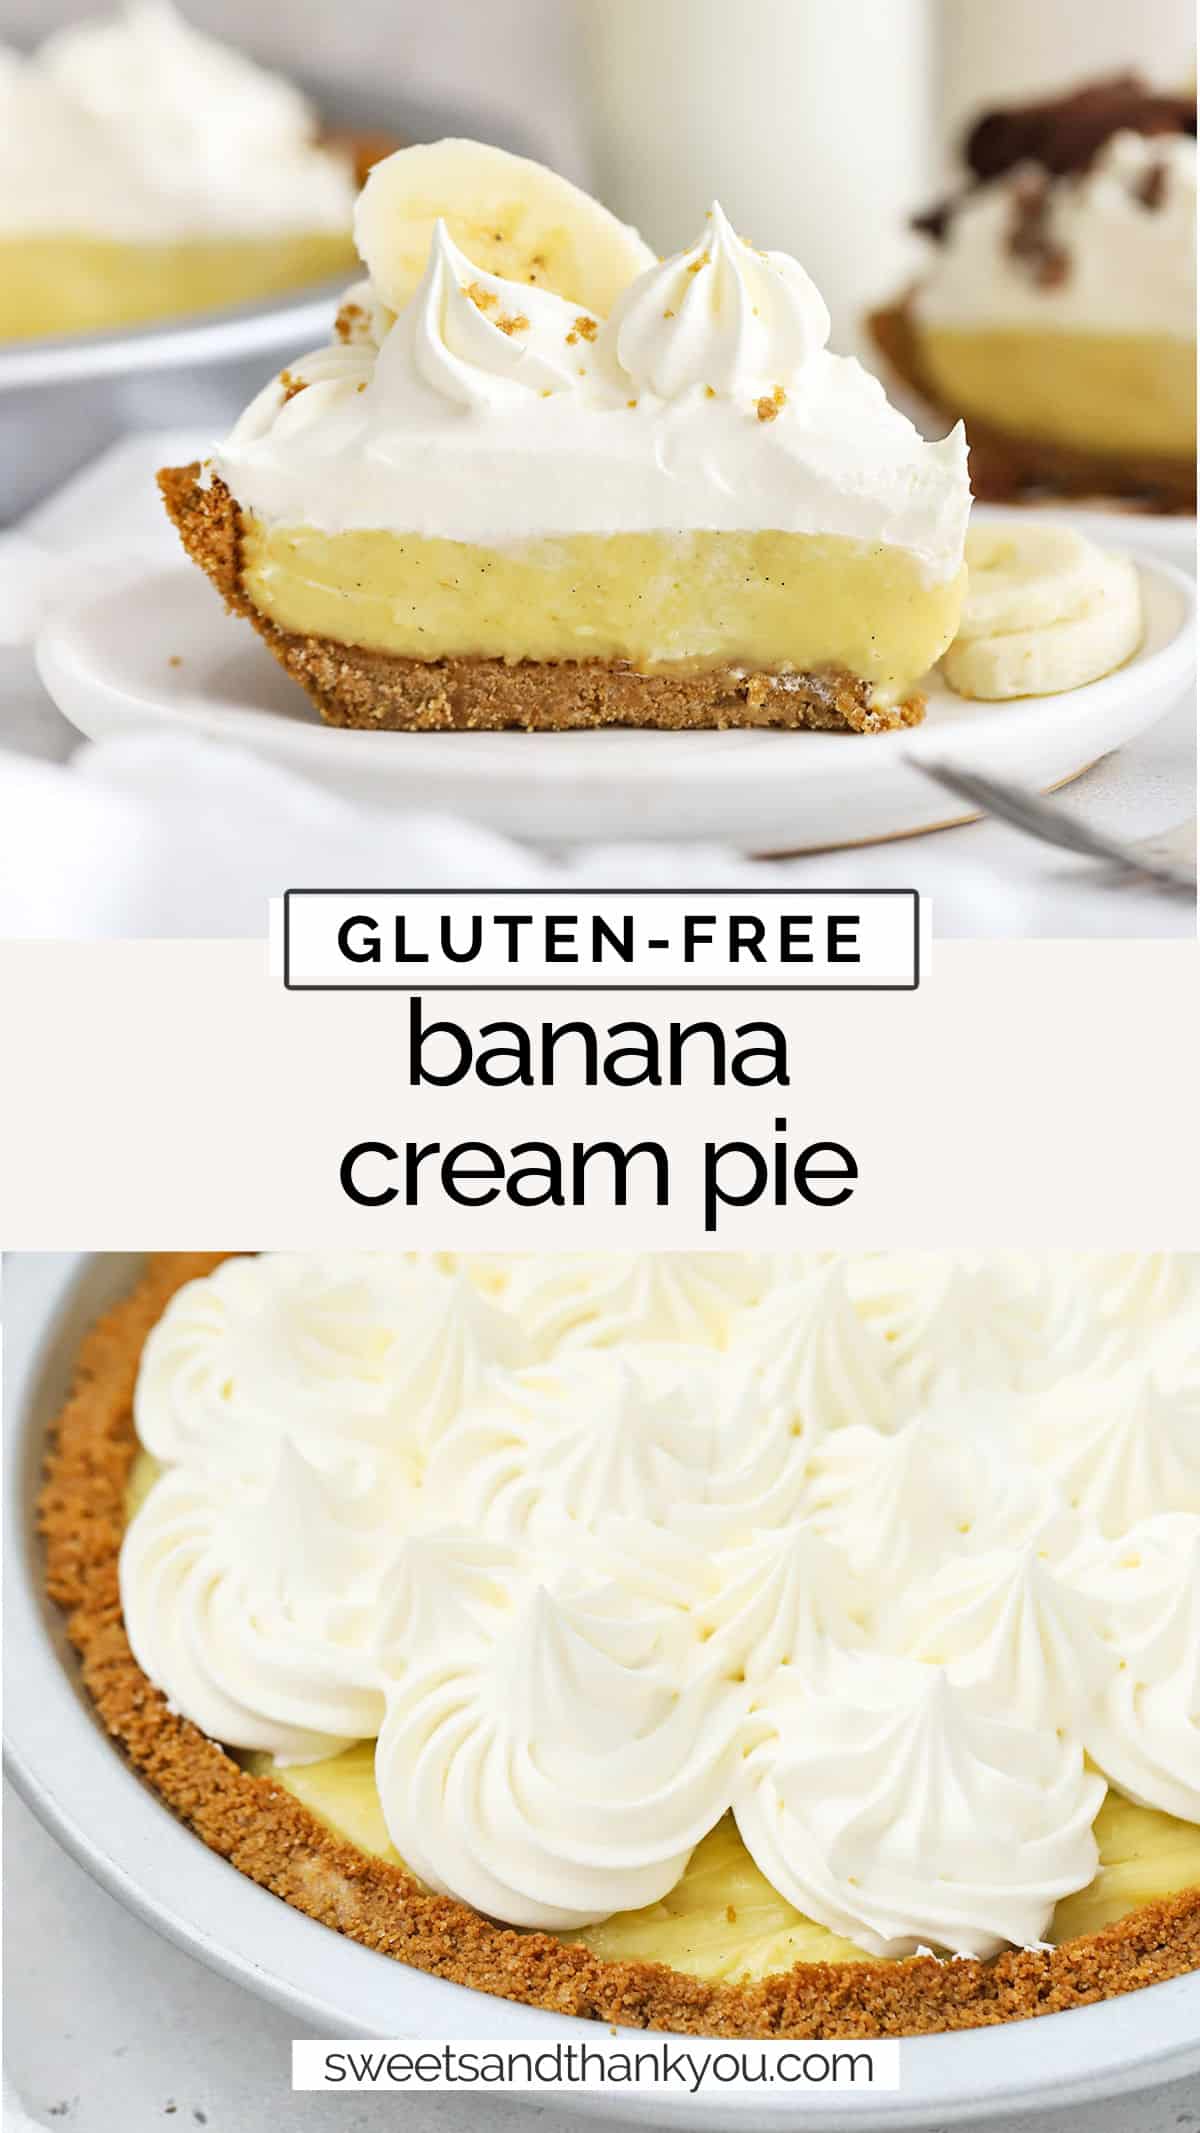 Gluten-Free Banana Cream Pie With Graham Crust - Our gluten-free banana cream pie recipe uses an easy trick to majorly turn up the flavor! / gluten-free banana pie recipe //gluten-free pie recipe / gluten-free cream pie / gluten-free pie with graham cracker crust / easy gluten-free pie recipe / gluten-free thanksgiving dessert / gluten-free banana pudding pie / gluten-free pudding pie recipe / gluten-free banana cream pie from scratch / gluten-free banana cream pie no pudding